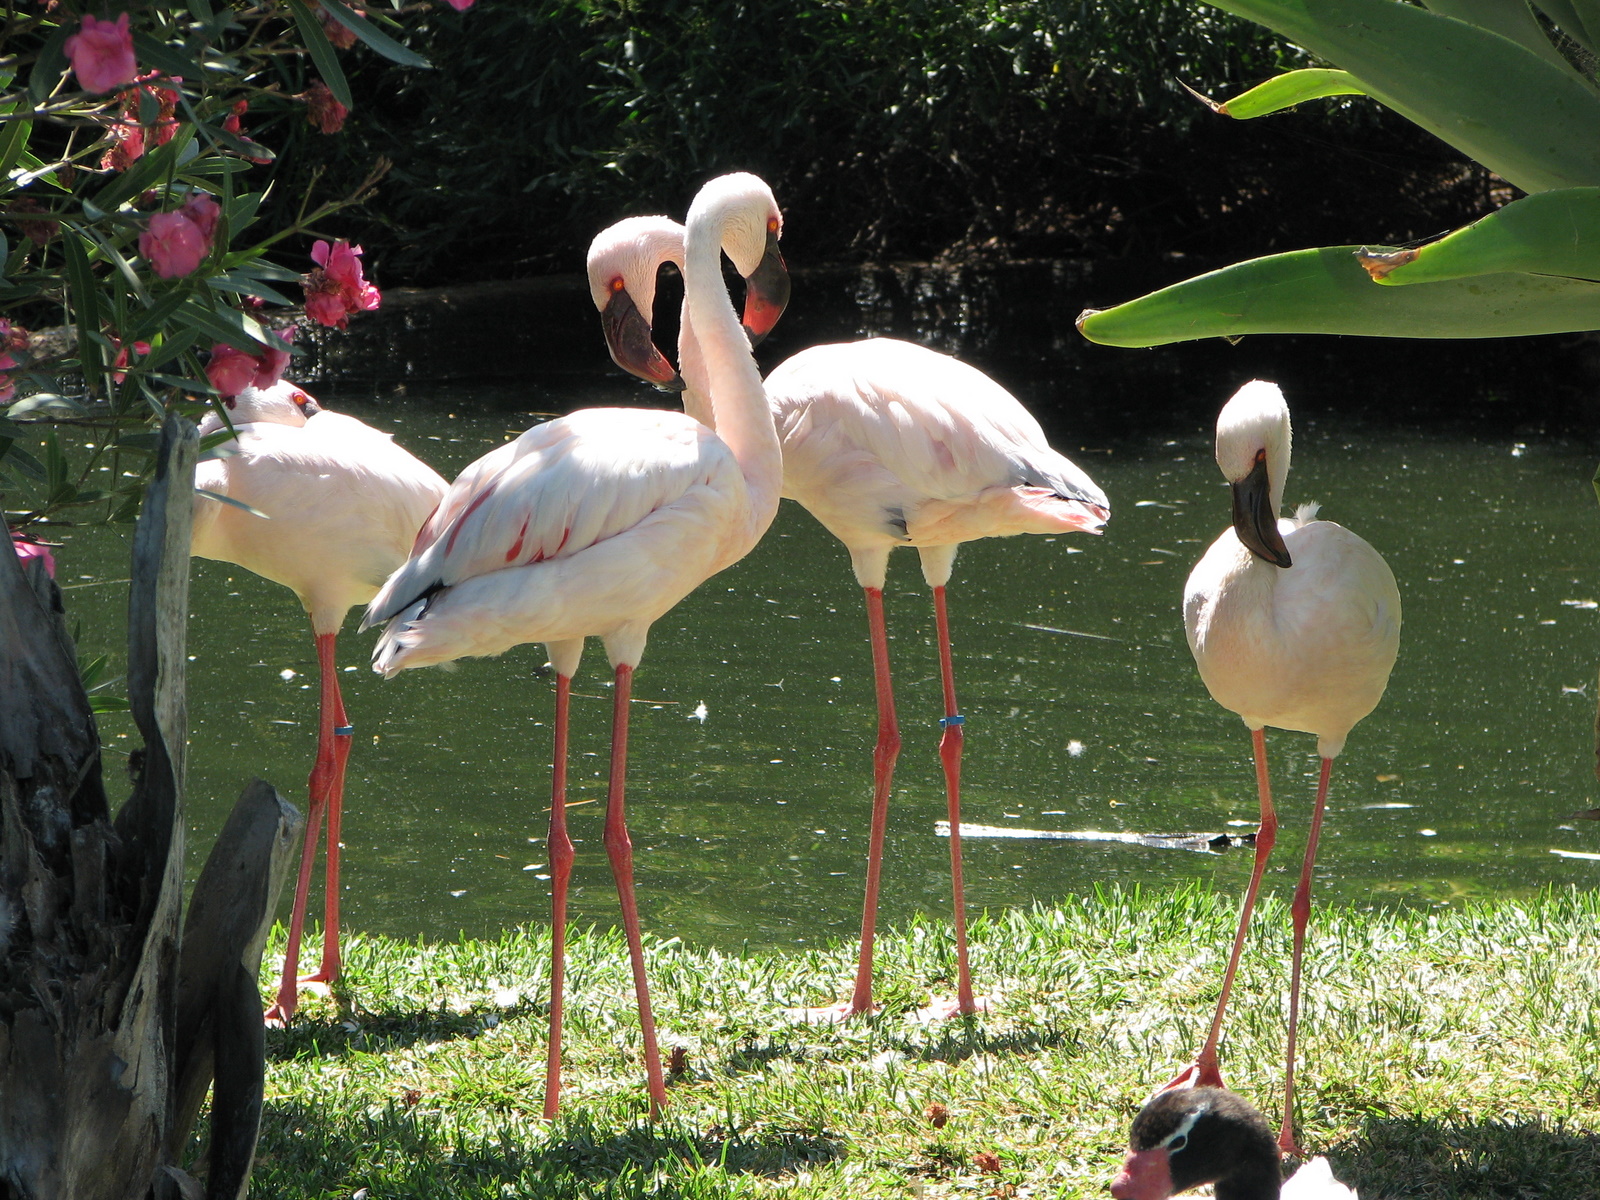 Pink_Flamingo_(4_of_them)_-_Lagos_Zoo_-_The_Algarve,_Portugal_(1735340479).jpg